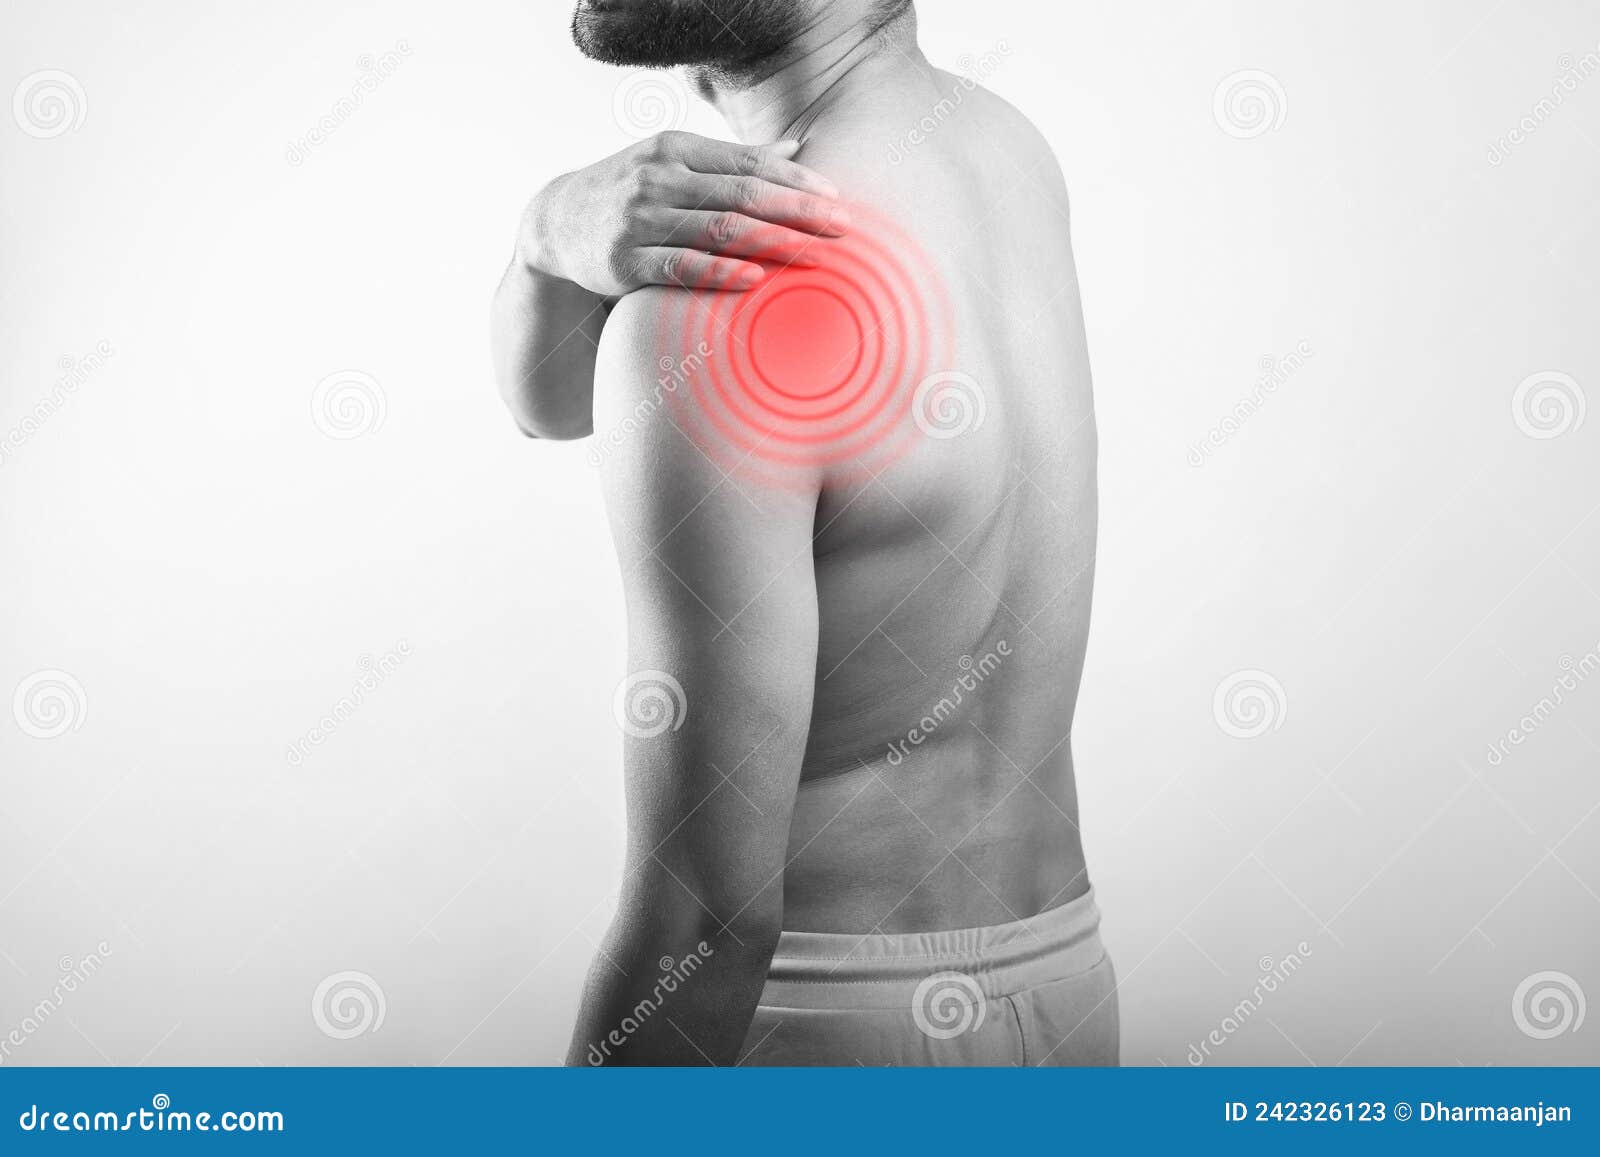 rear shoulder joint pain or deltoids muscle soreness